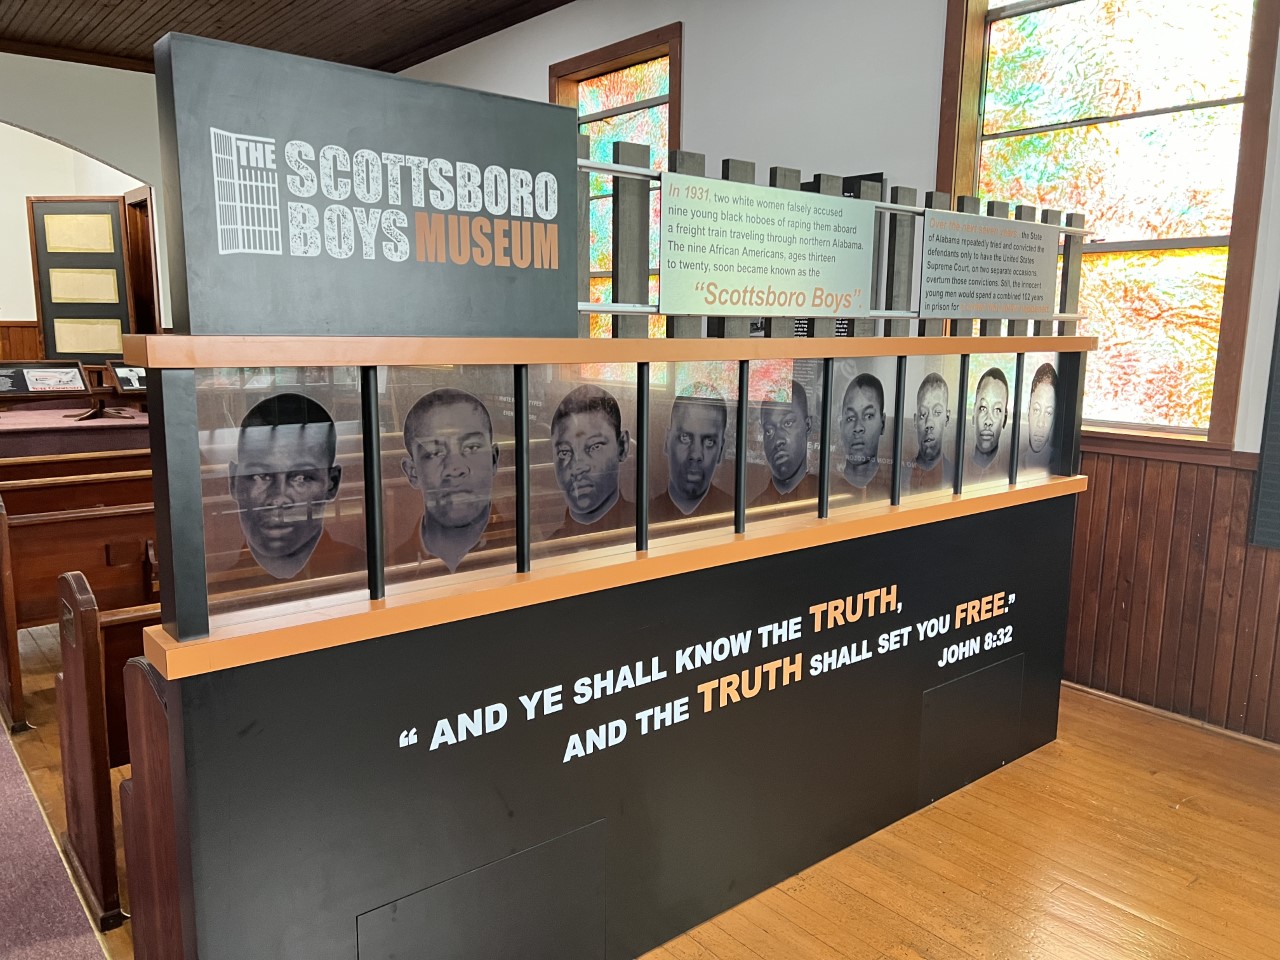 The Scottsboro Boys Museum